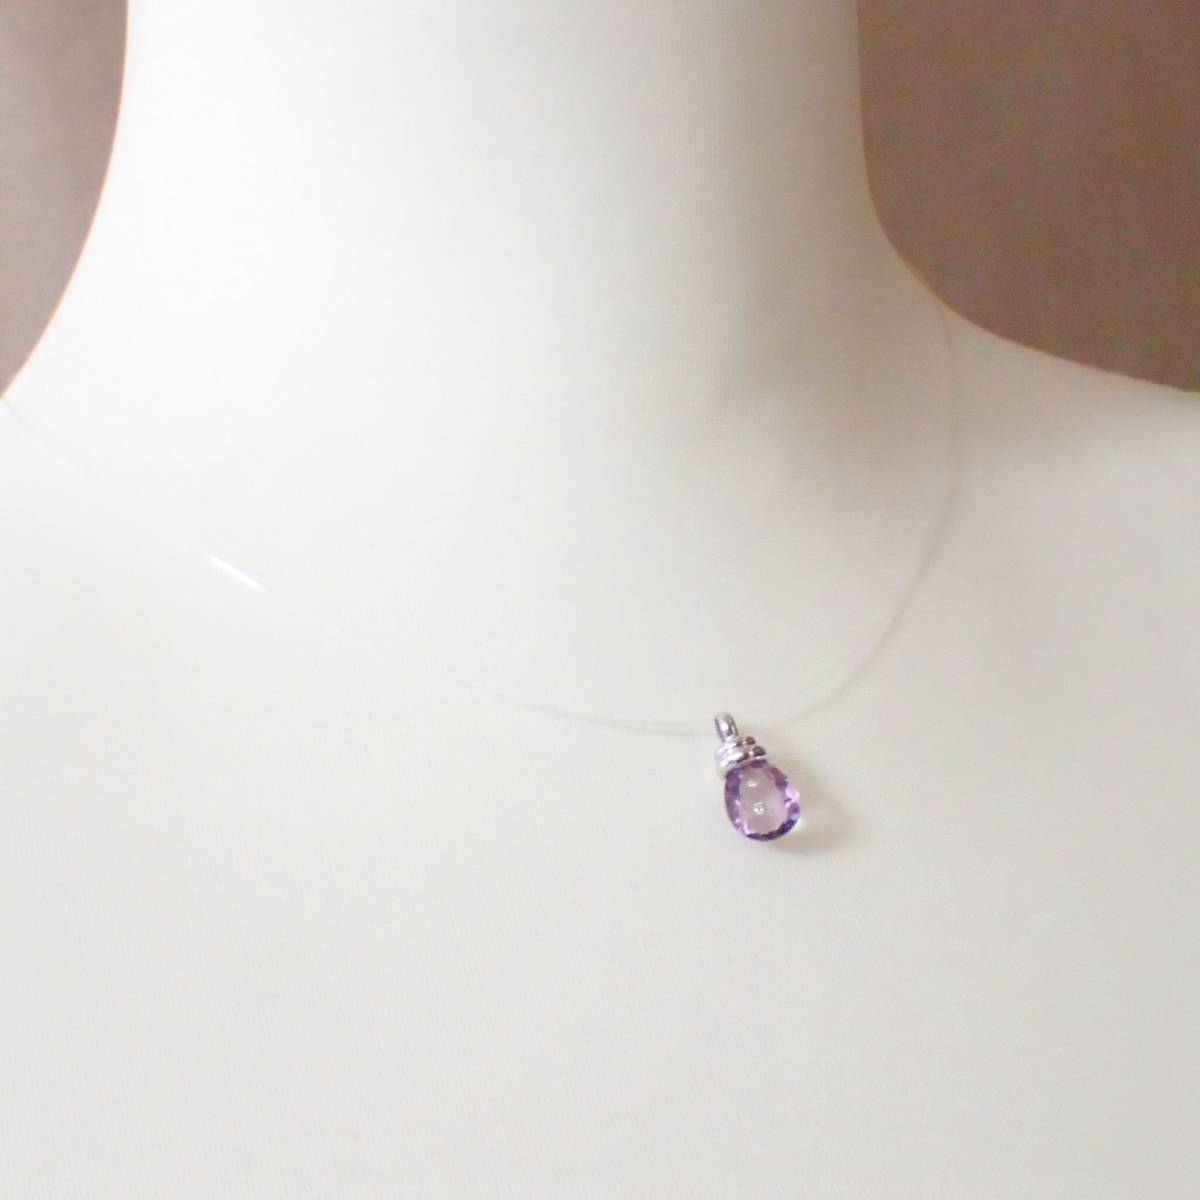  diamond in amethyst K18WG pendant top with discrimination 